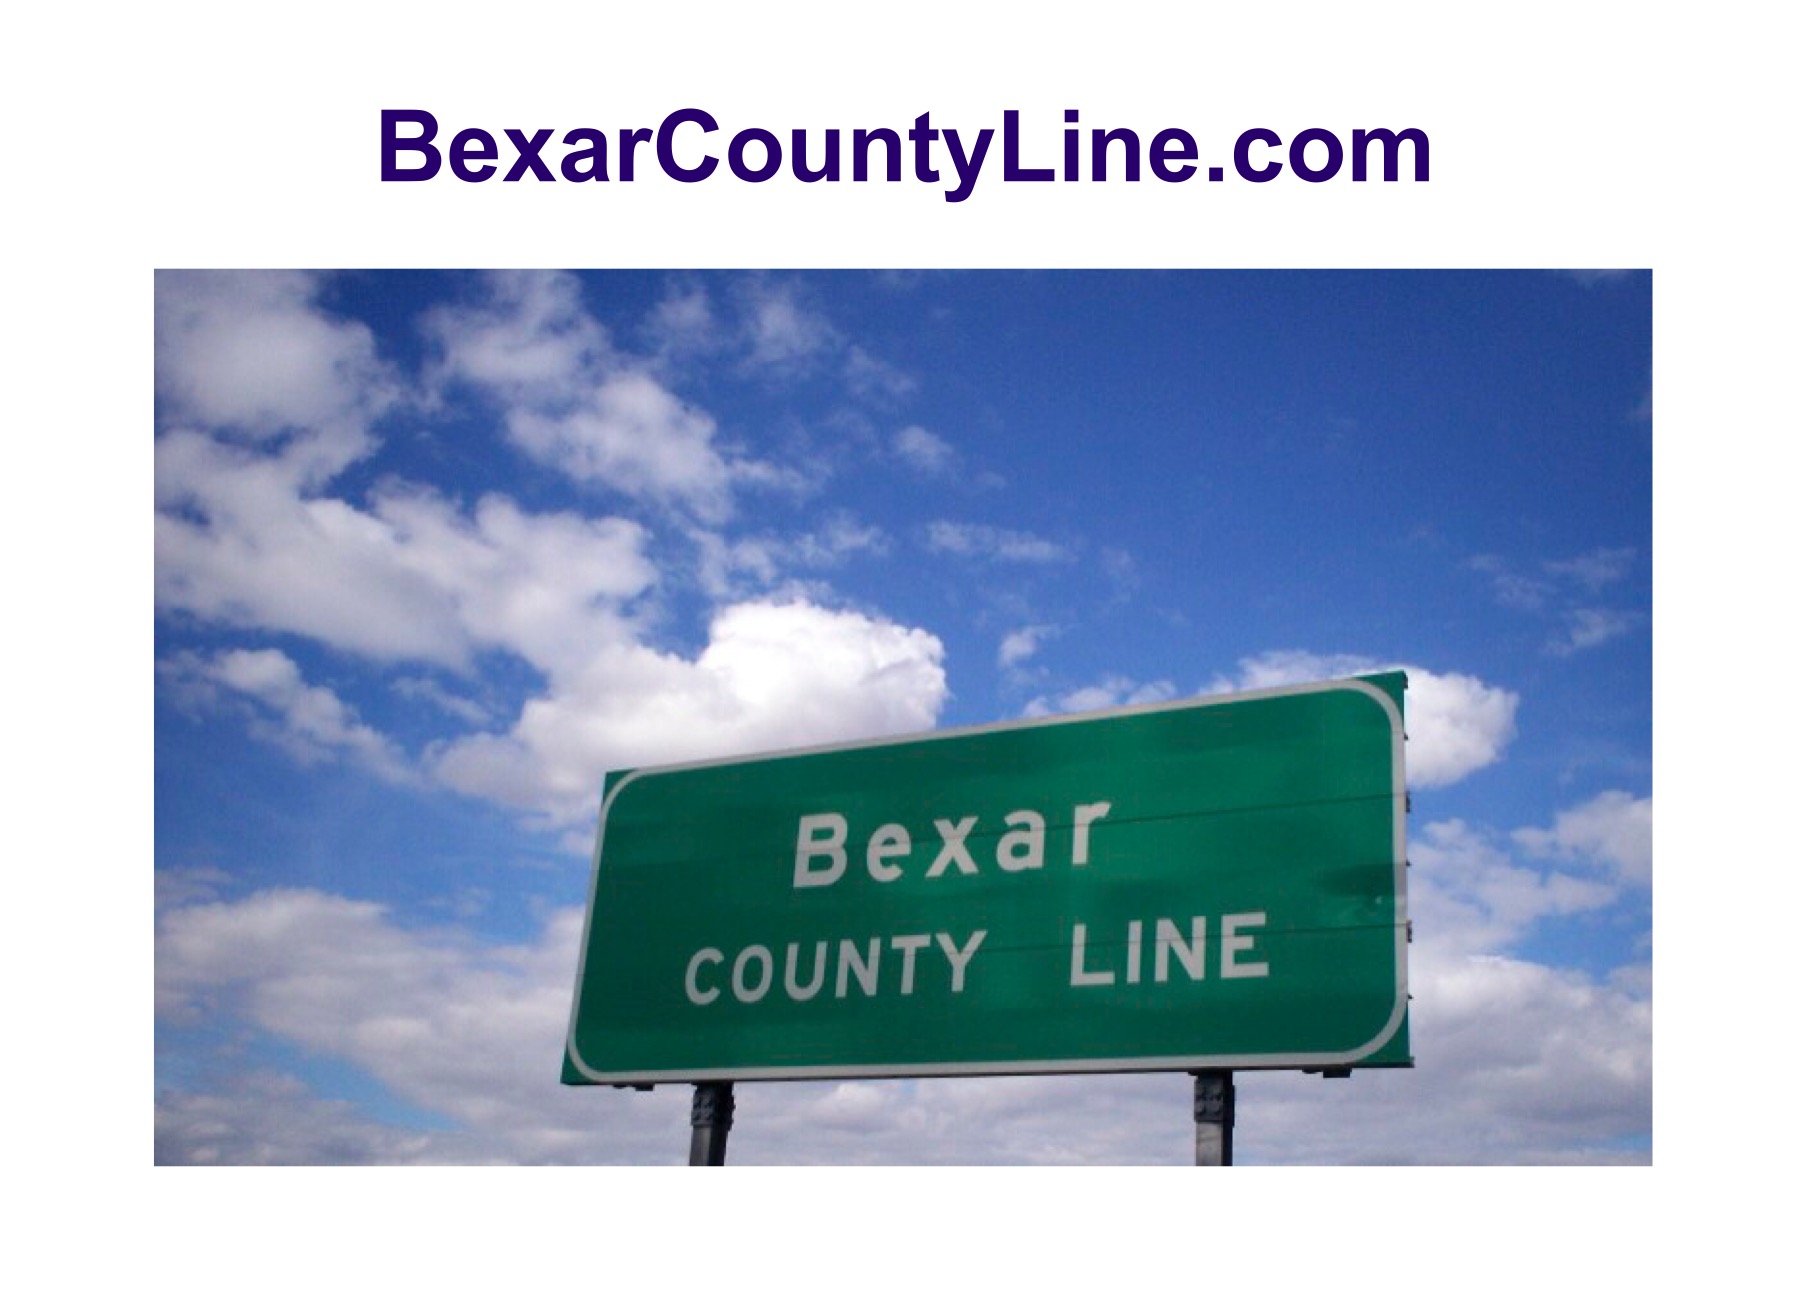 Bexar County Line